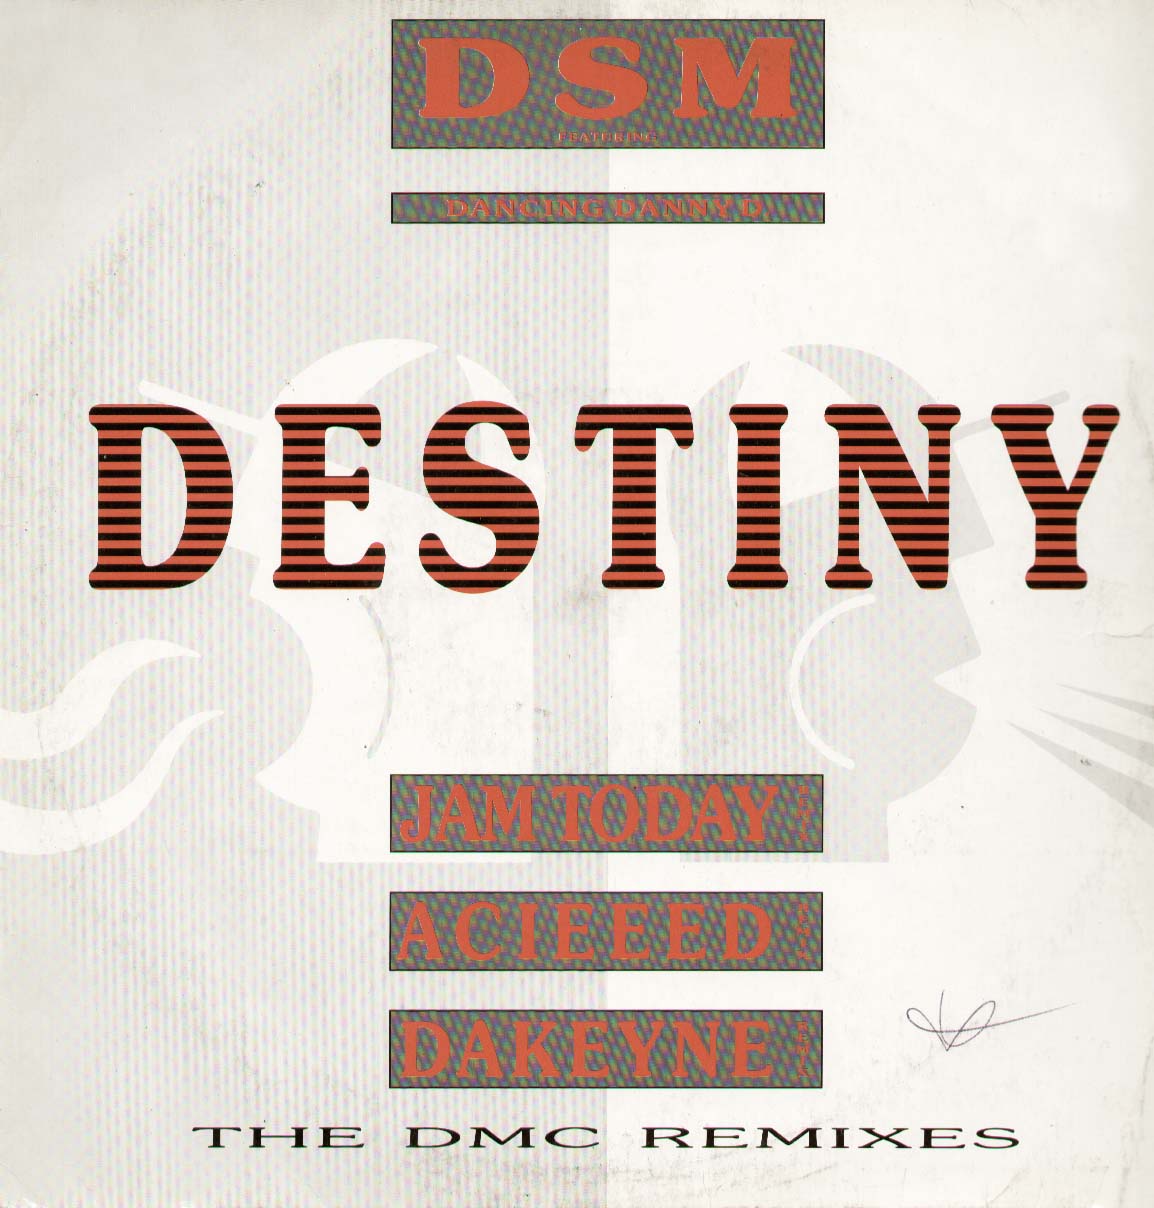 DSM - Destiny